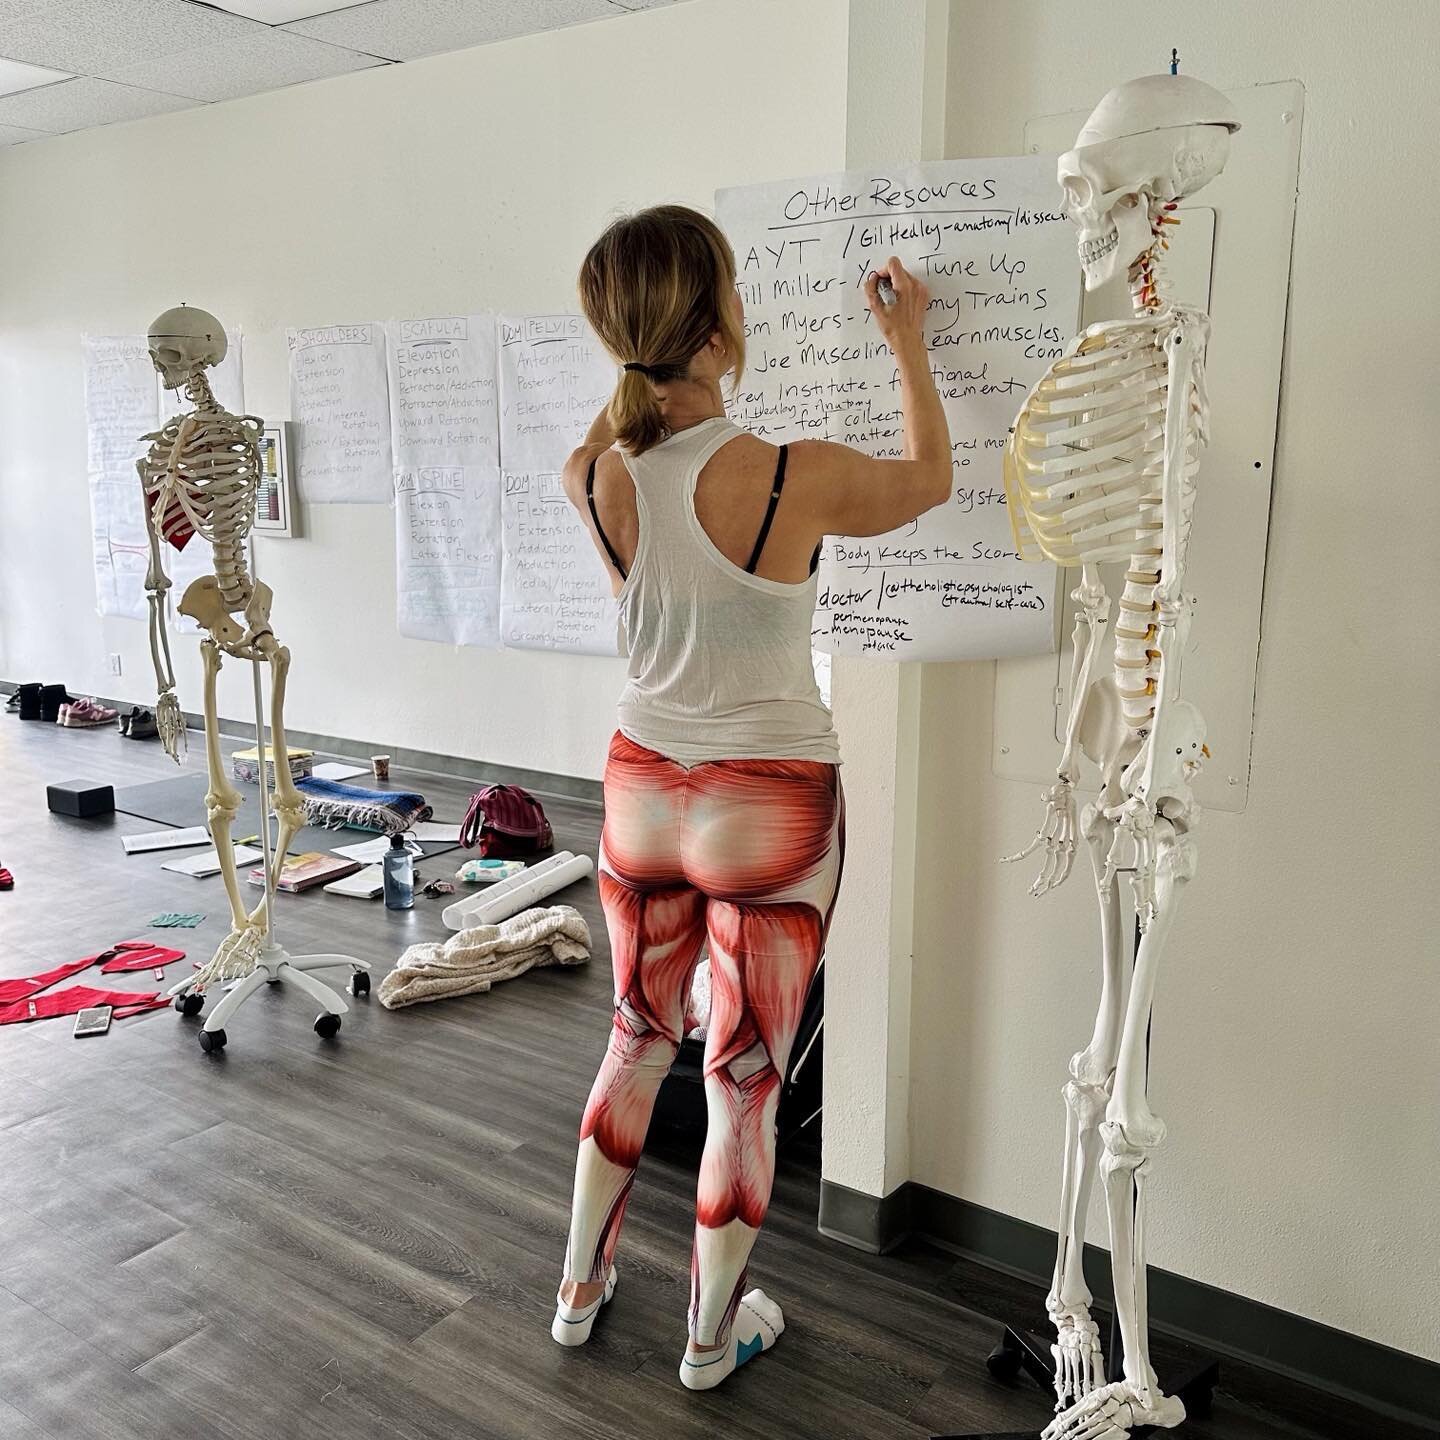 How does my gluteus maximus look in these leggings? #anatomytraining #booty #yogateachertraining #anatomyfashion #anatomyhumor #gwenyeageryoga #reddiamondyoga